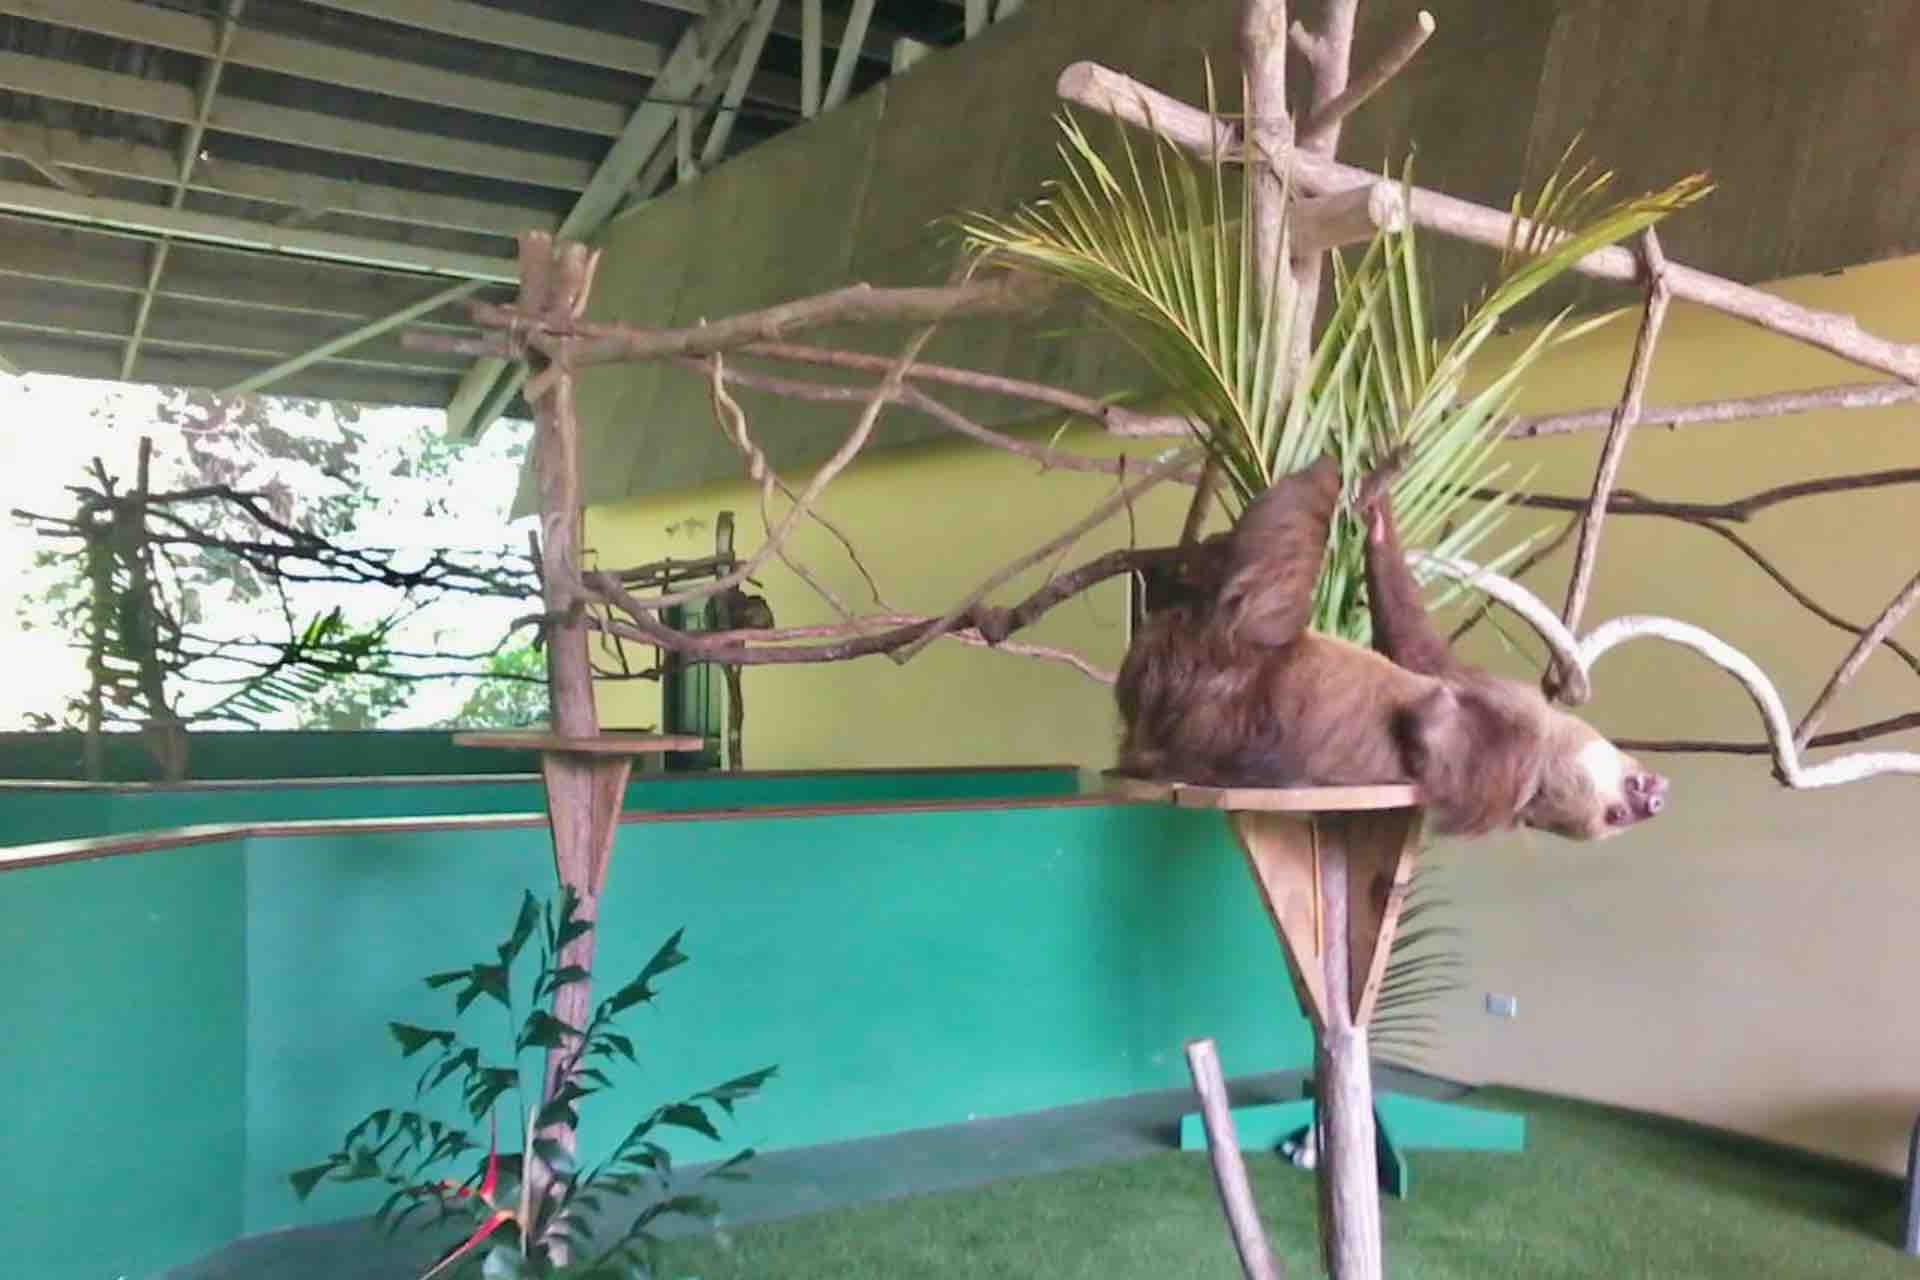 Panama Monkey Island and Sloth tour exhibit